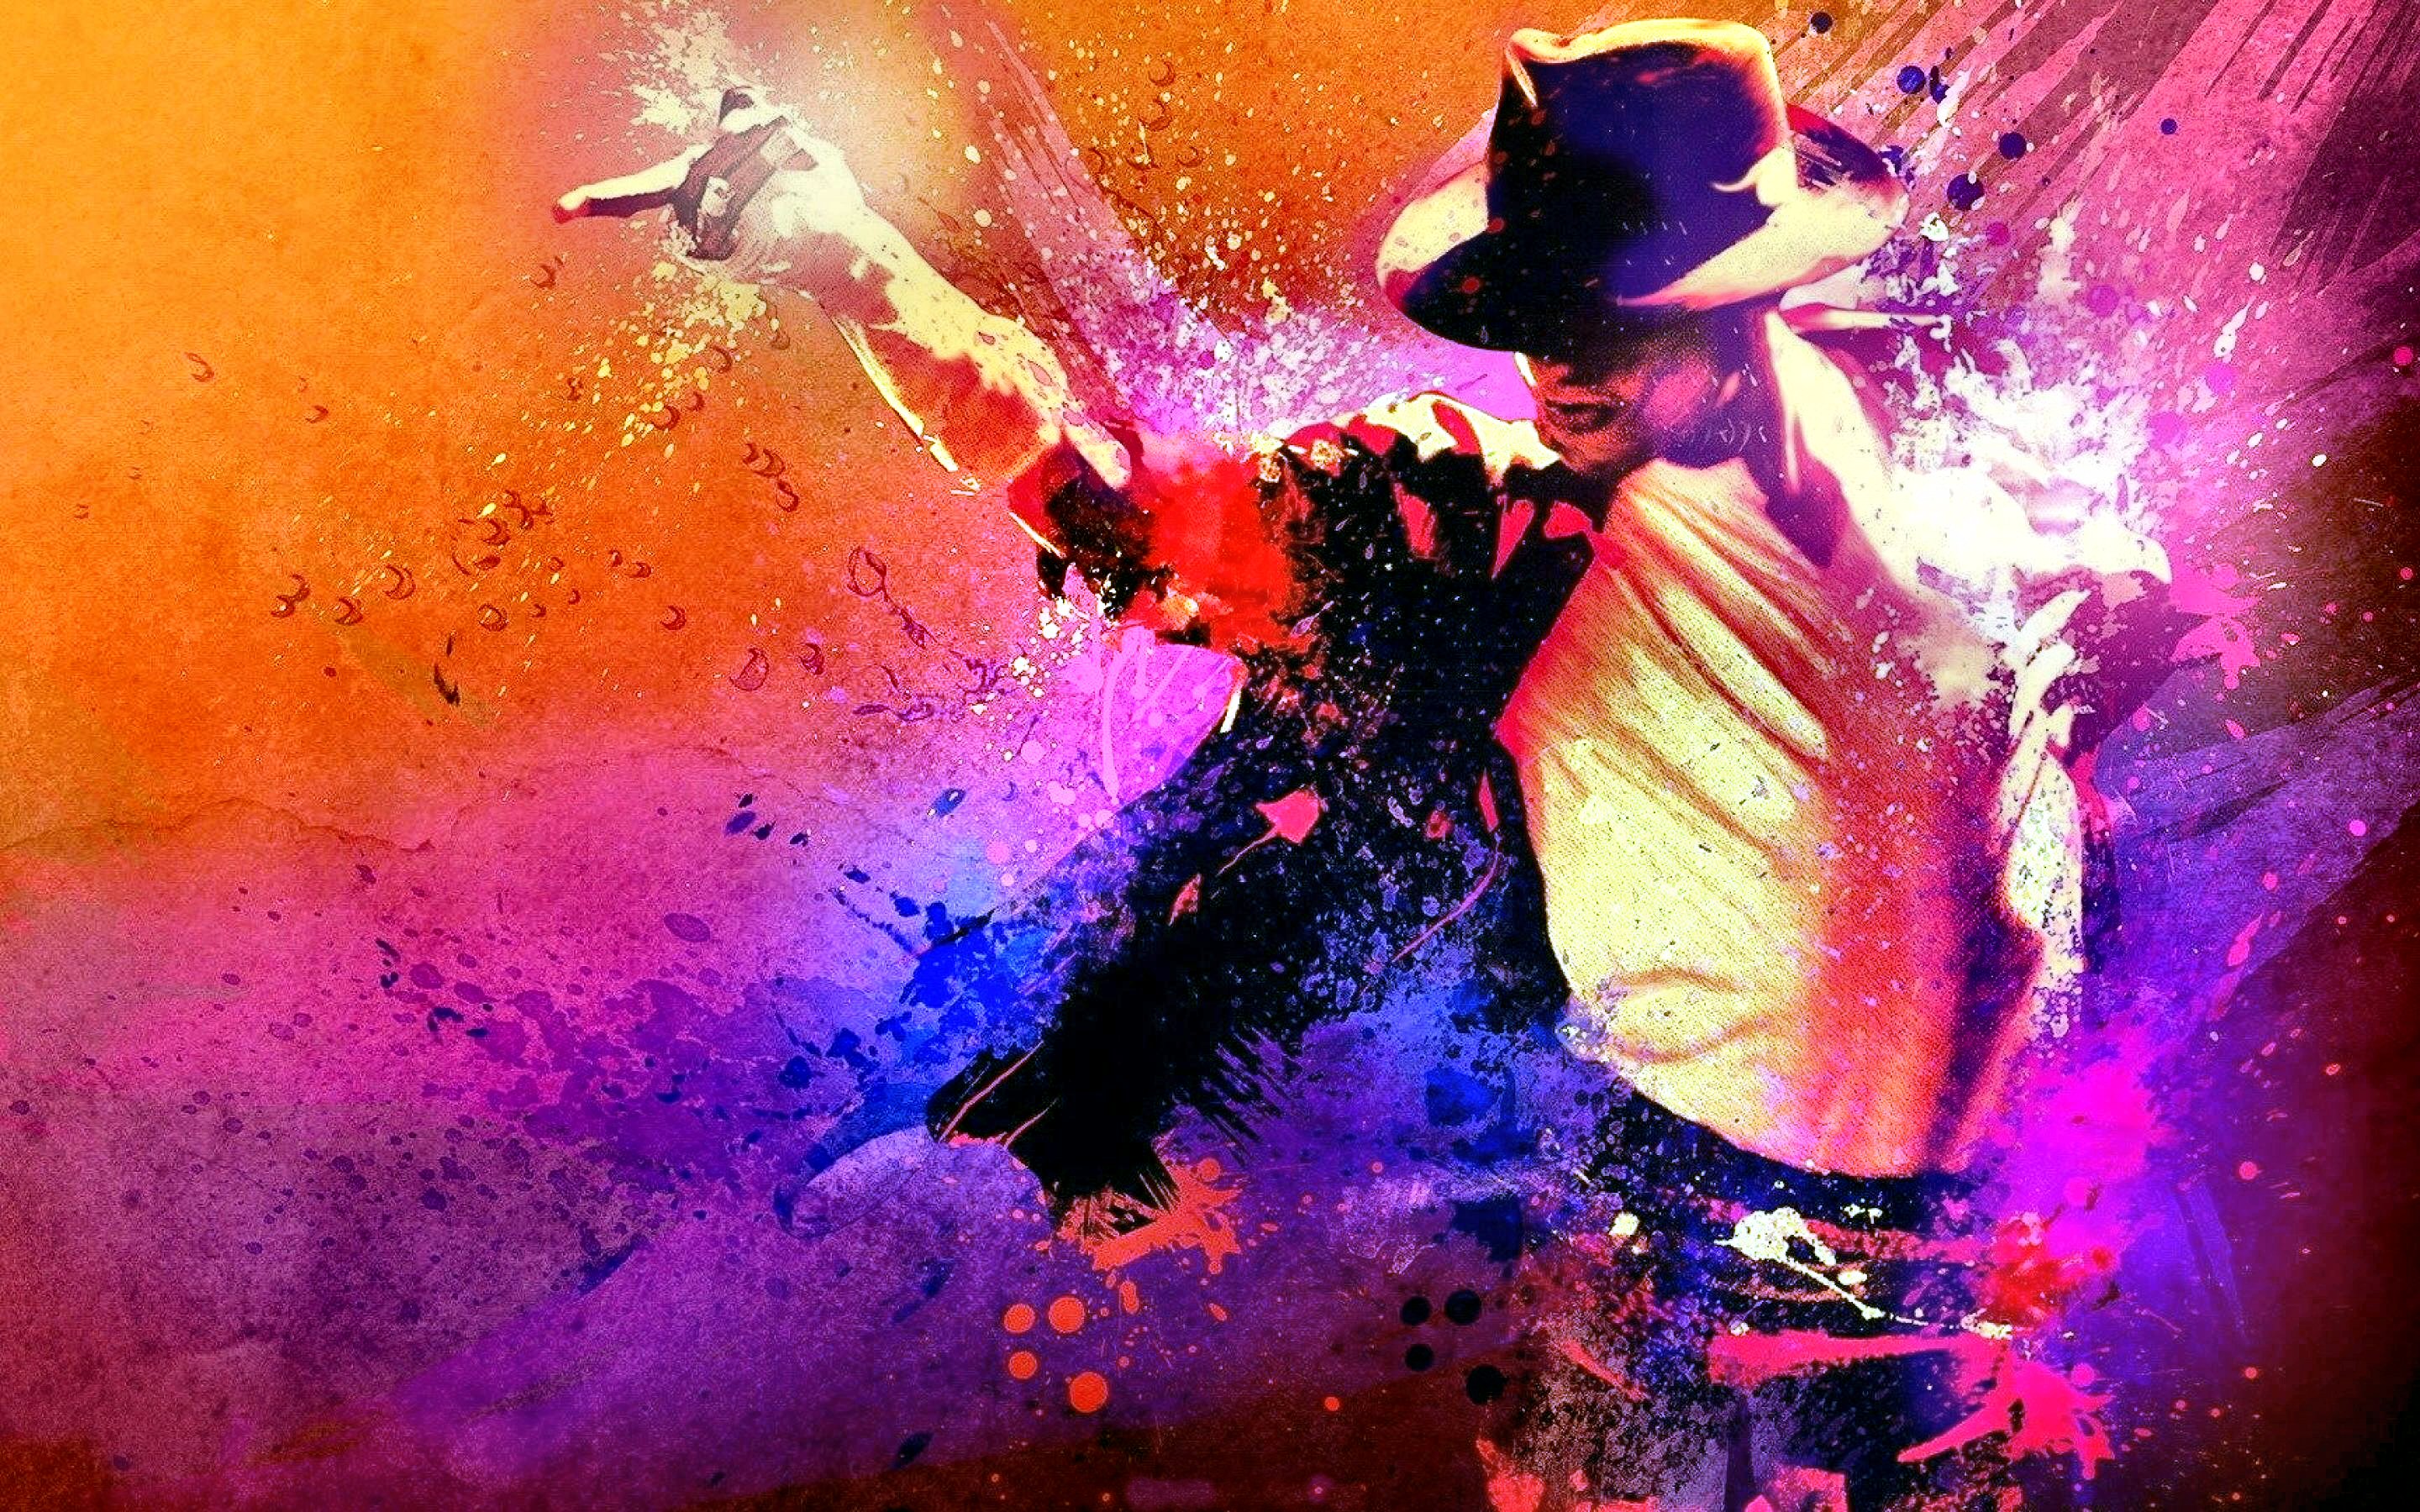 Michael Jackson Wallpapers HD A27